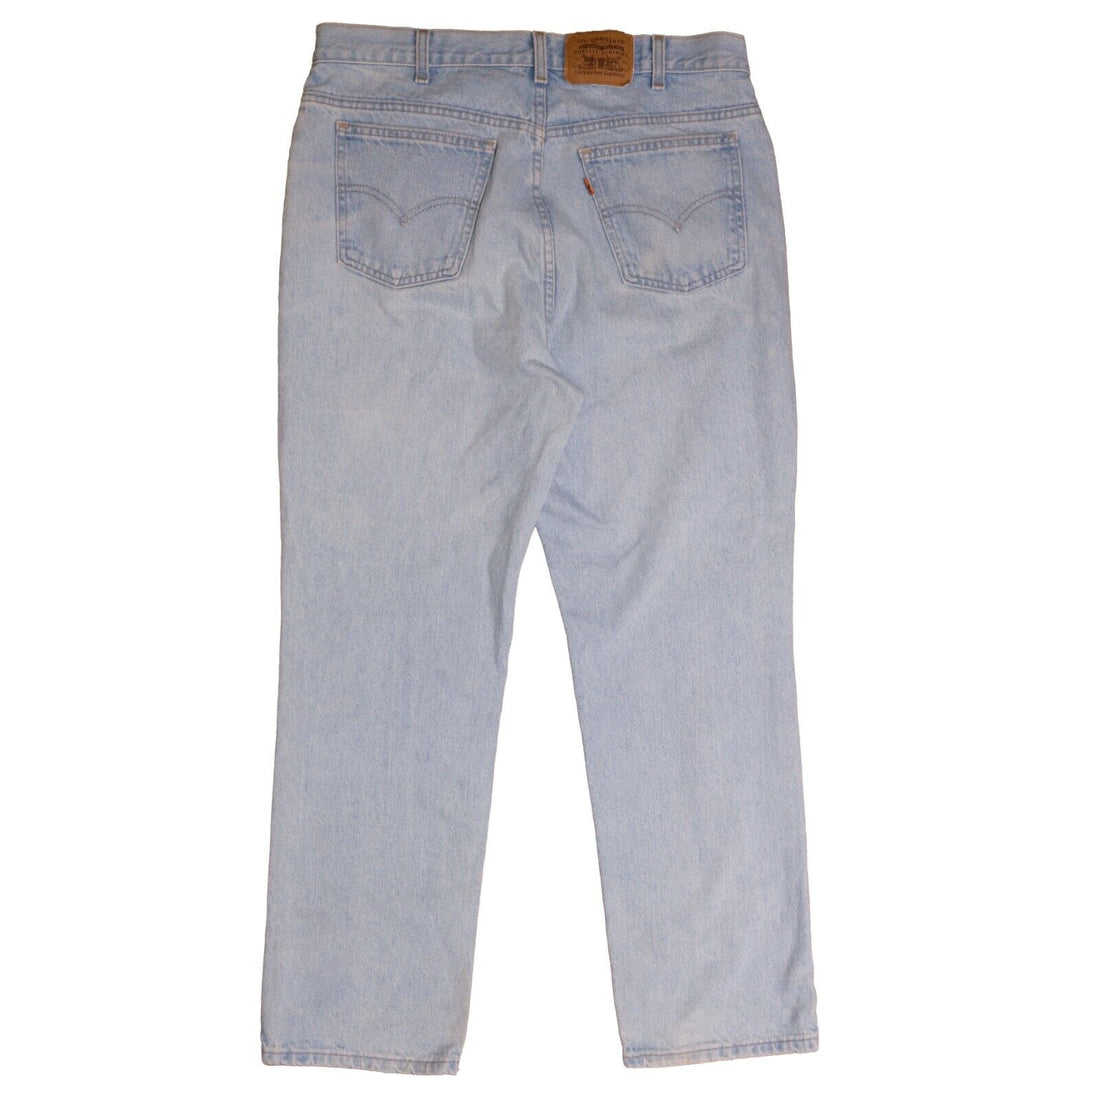 Vintage Levi Strauss & Co 506 Denim Jeans Pants Size 36 X 30 5061902040